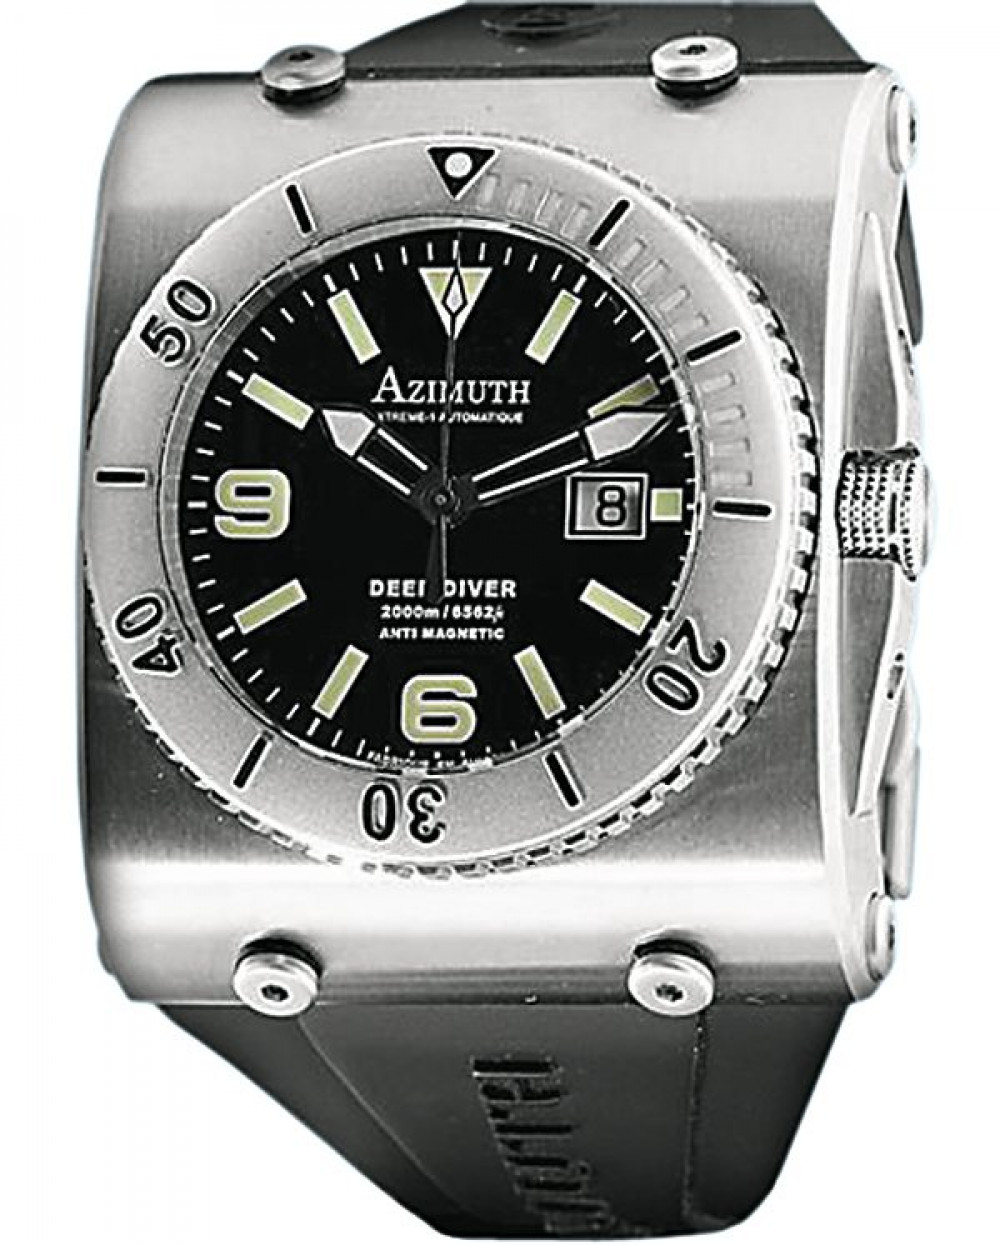 Zegarek firmy Azimuth, model Xtreme-1 - Deep River